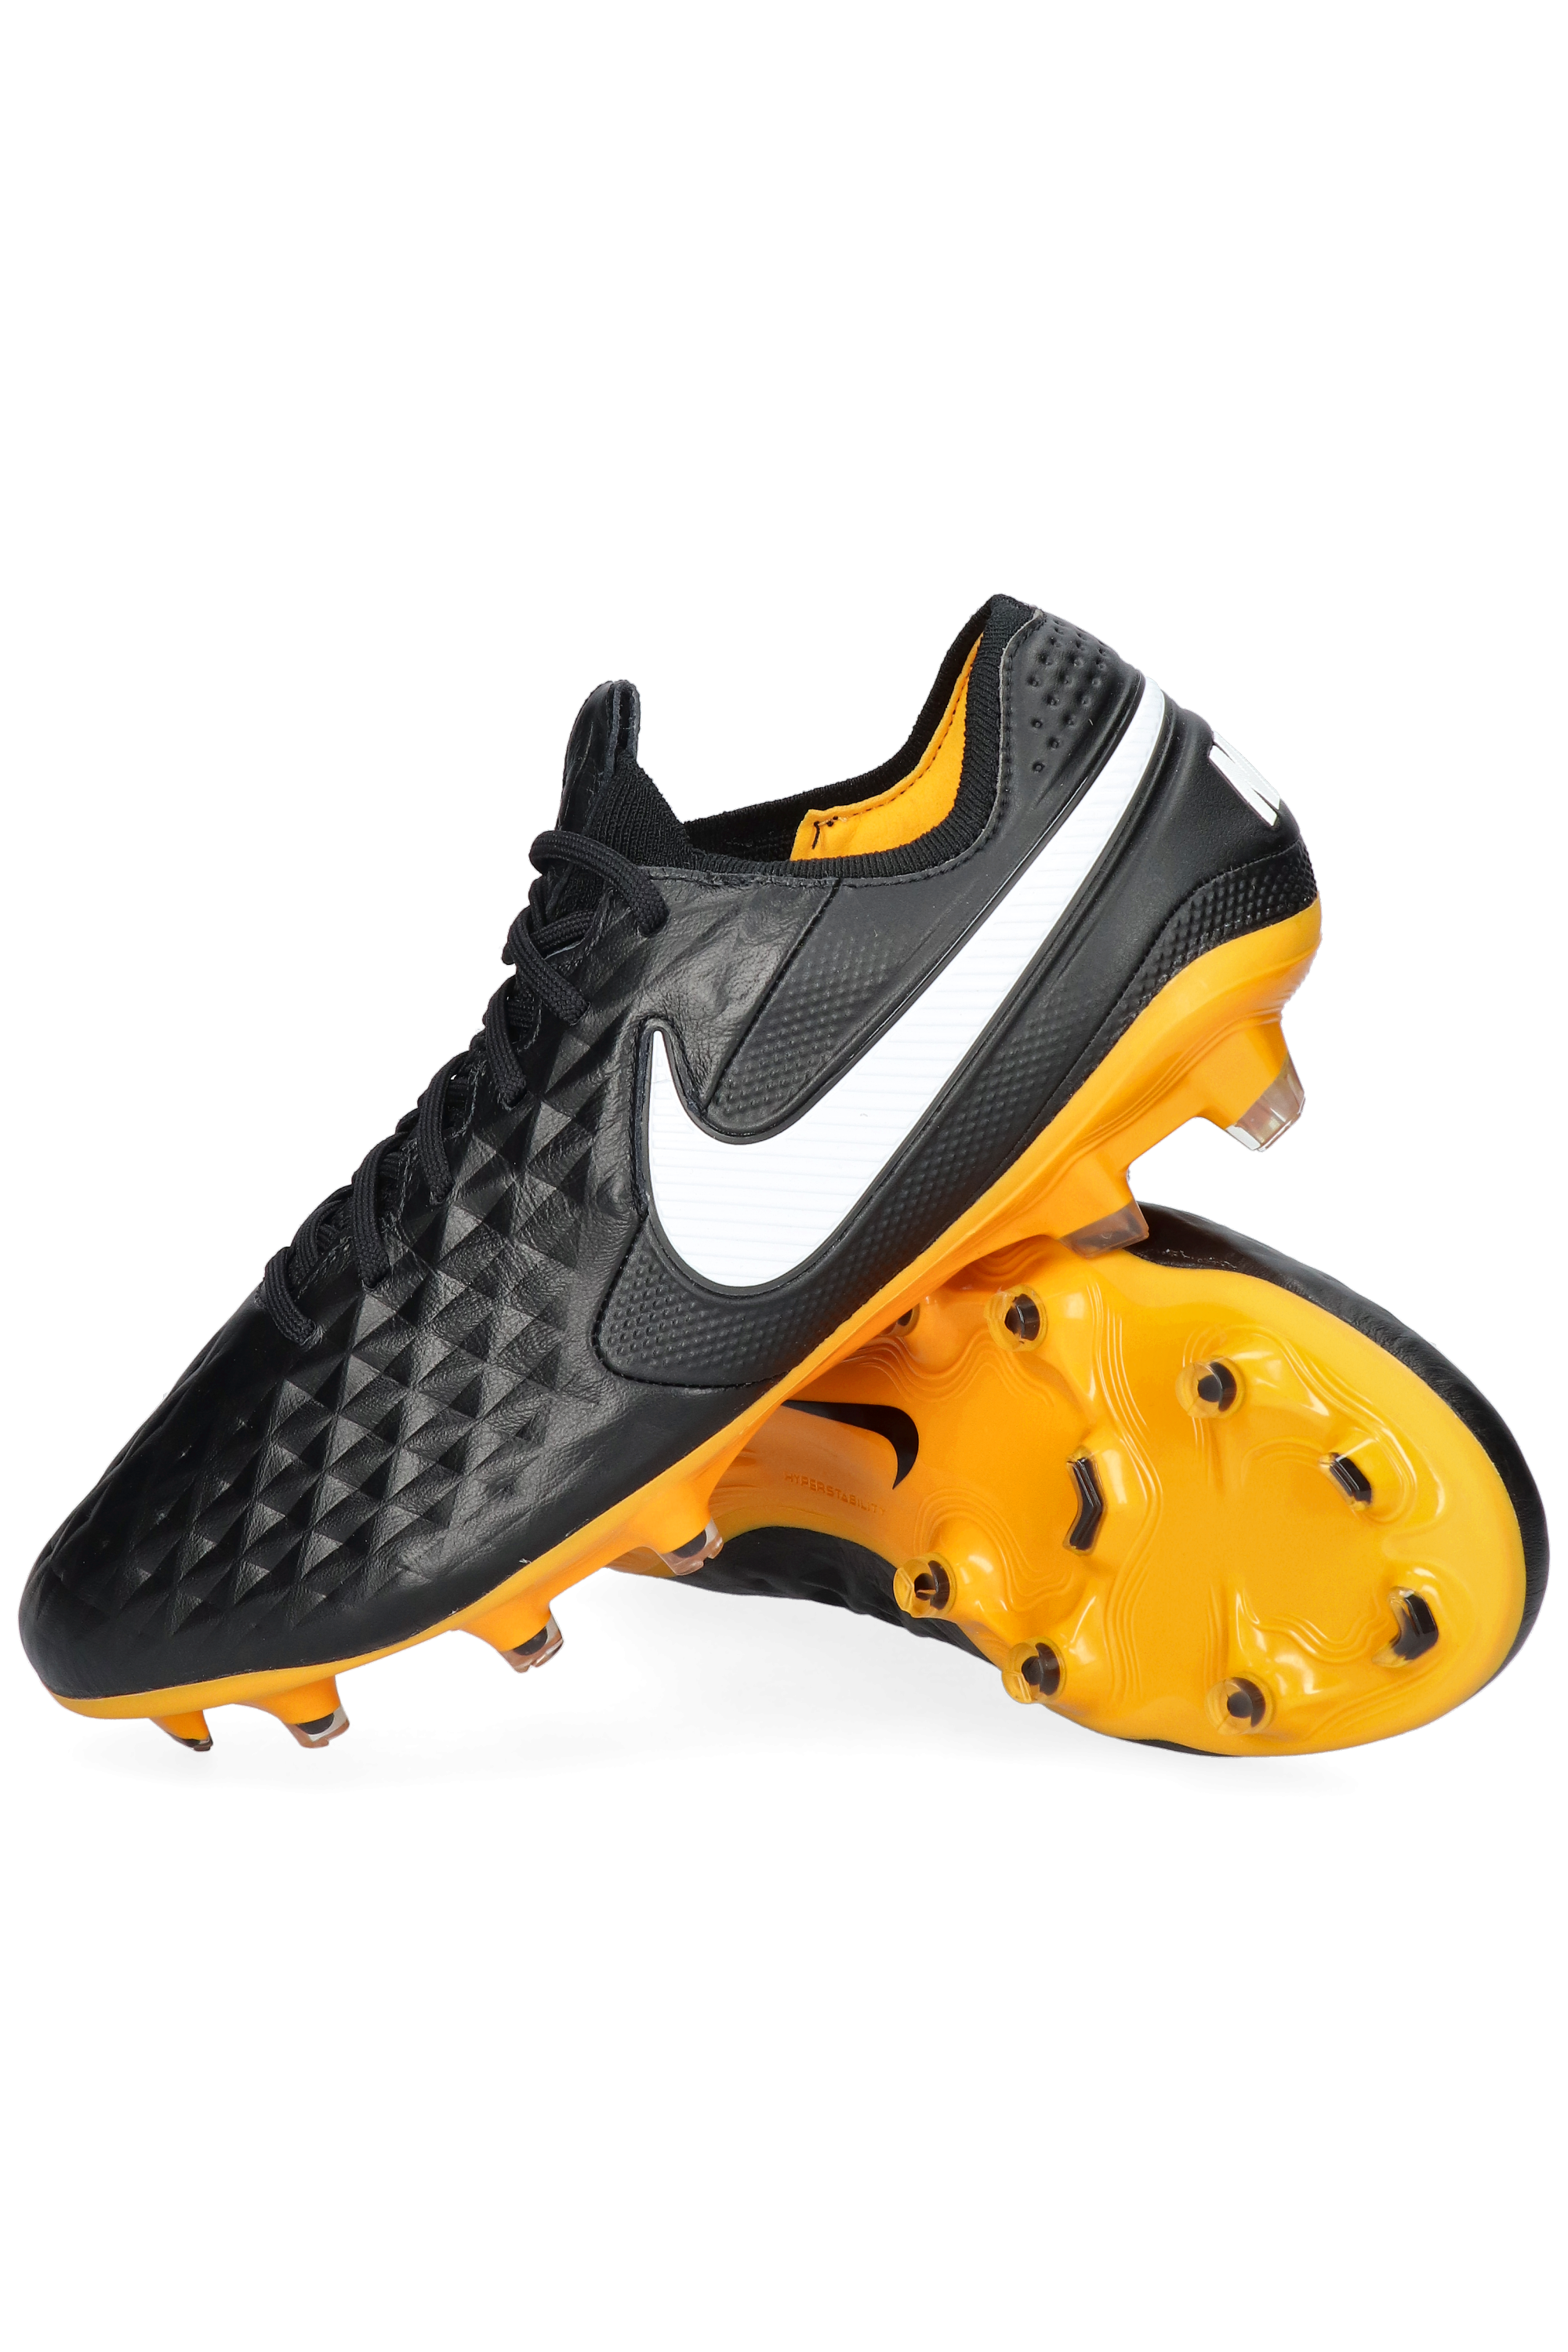 Nike Tiempo Legend 8 Elite TC FG | R-GOL.com - Football boots 